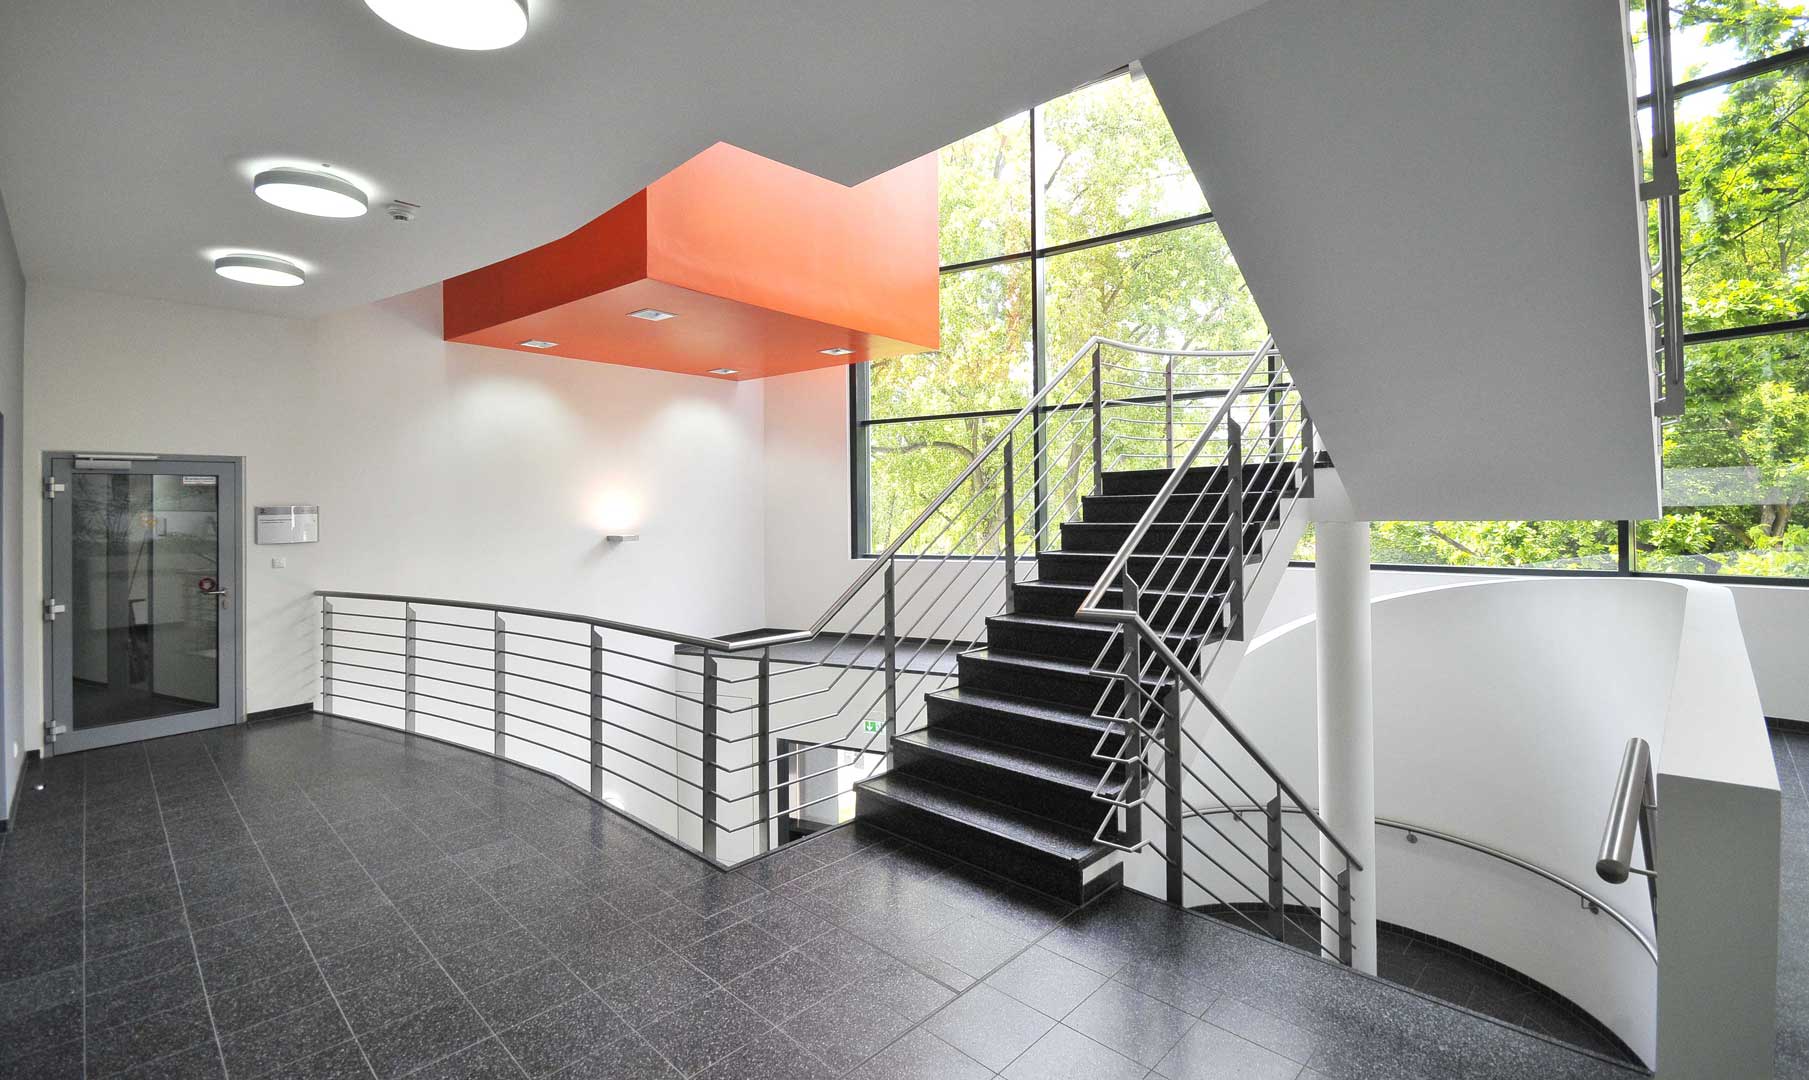 Galeriebild / Lufthansa Basis Hamburg, Lichtplanung des Innovationscenters